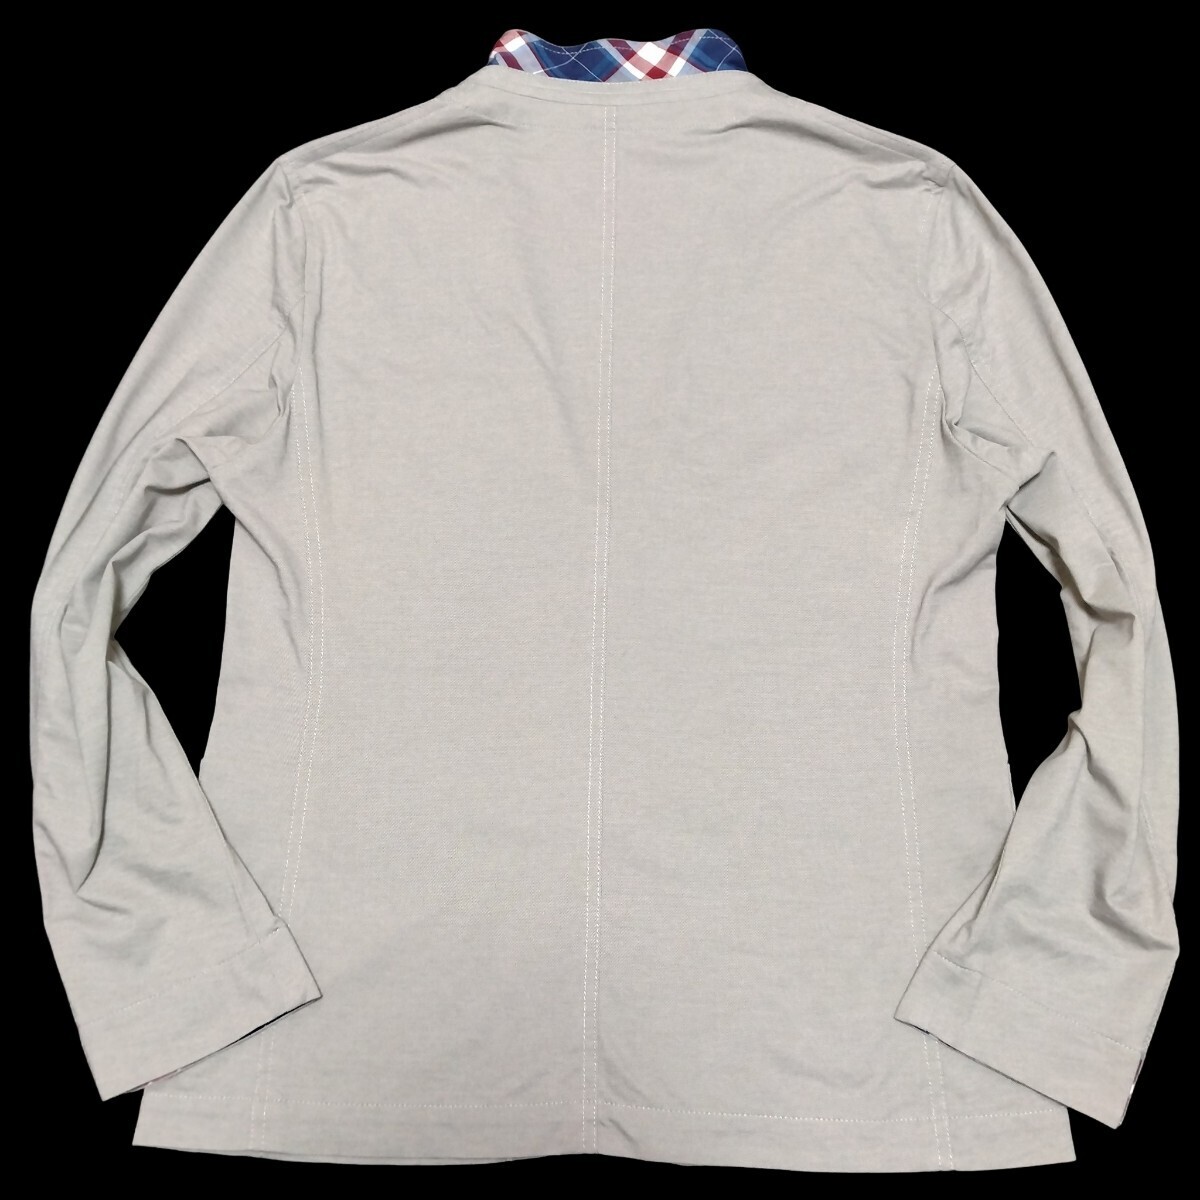  Burberry Black Label # воротник обратная сторона / манжеты обратная сторона noba проверка редкий LL размер серый серия summer tailored jacket BURBERRY BLACK LABEL